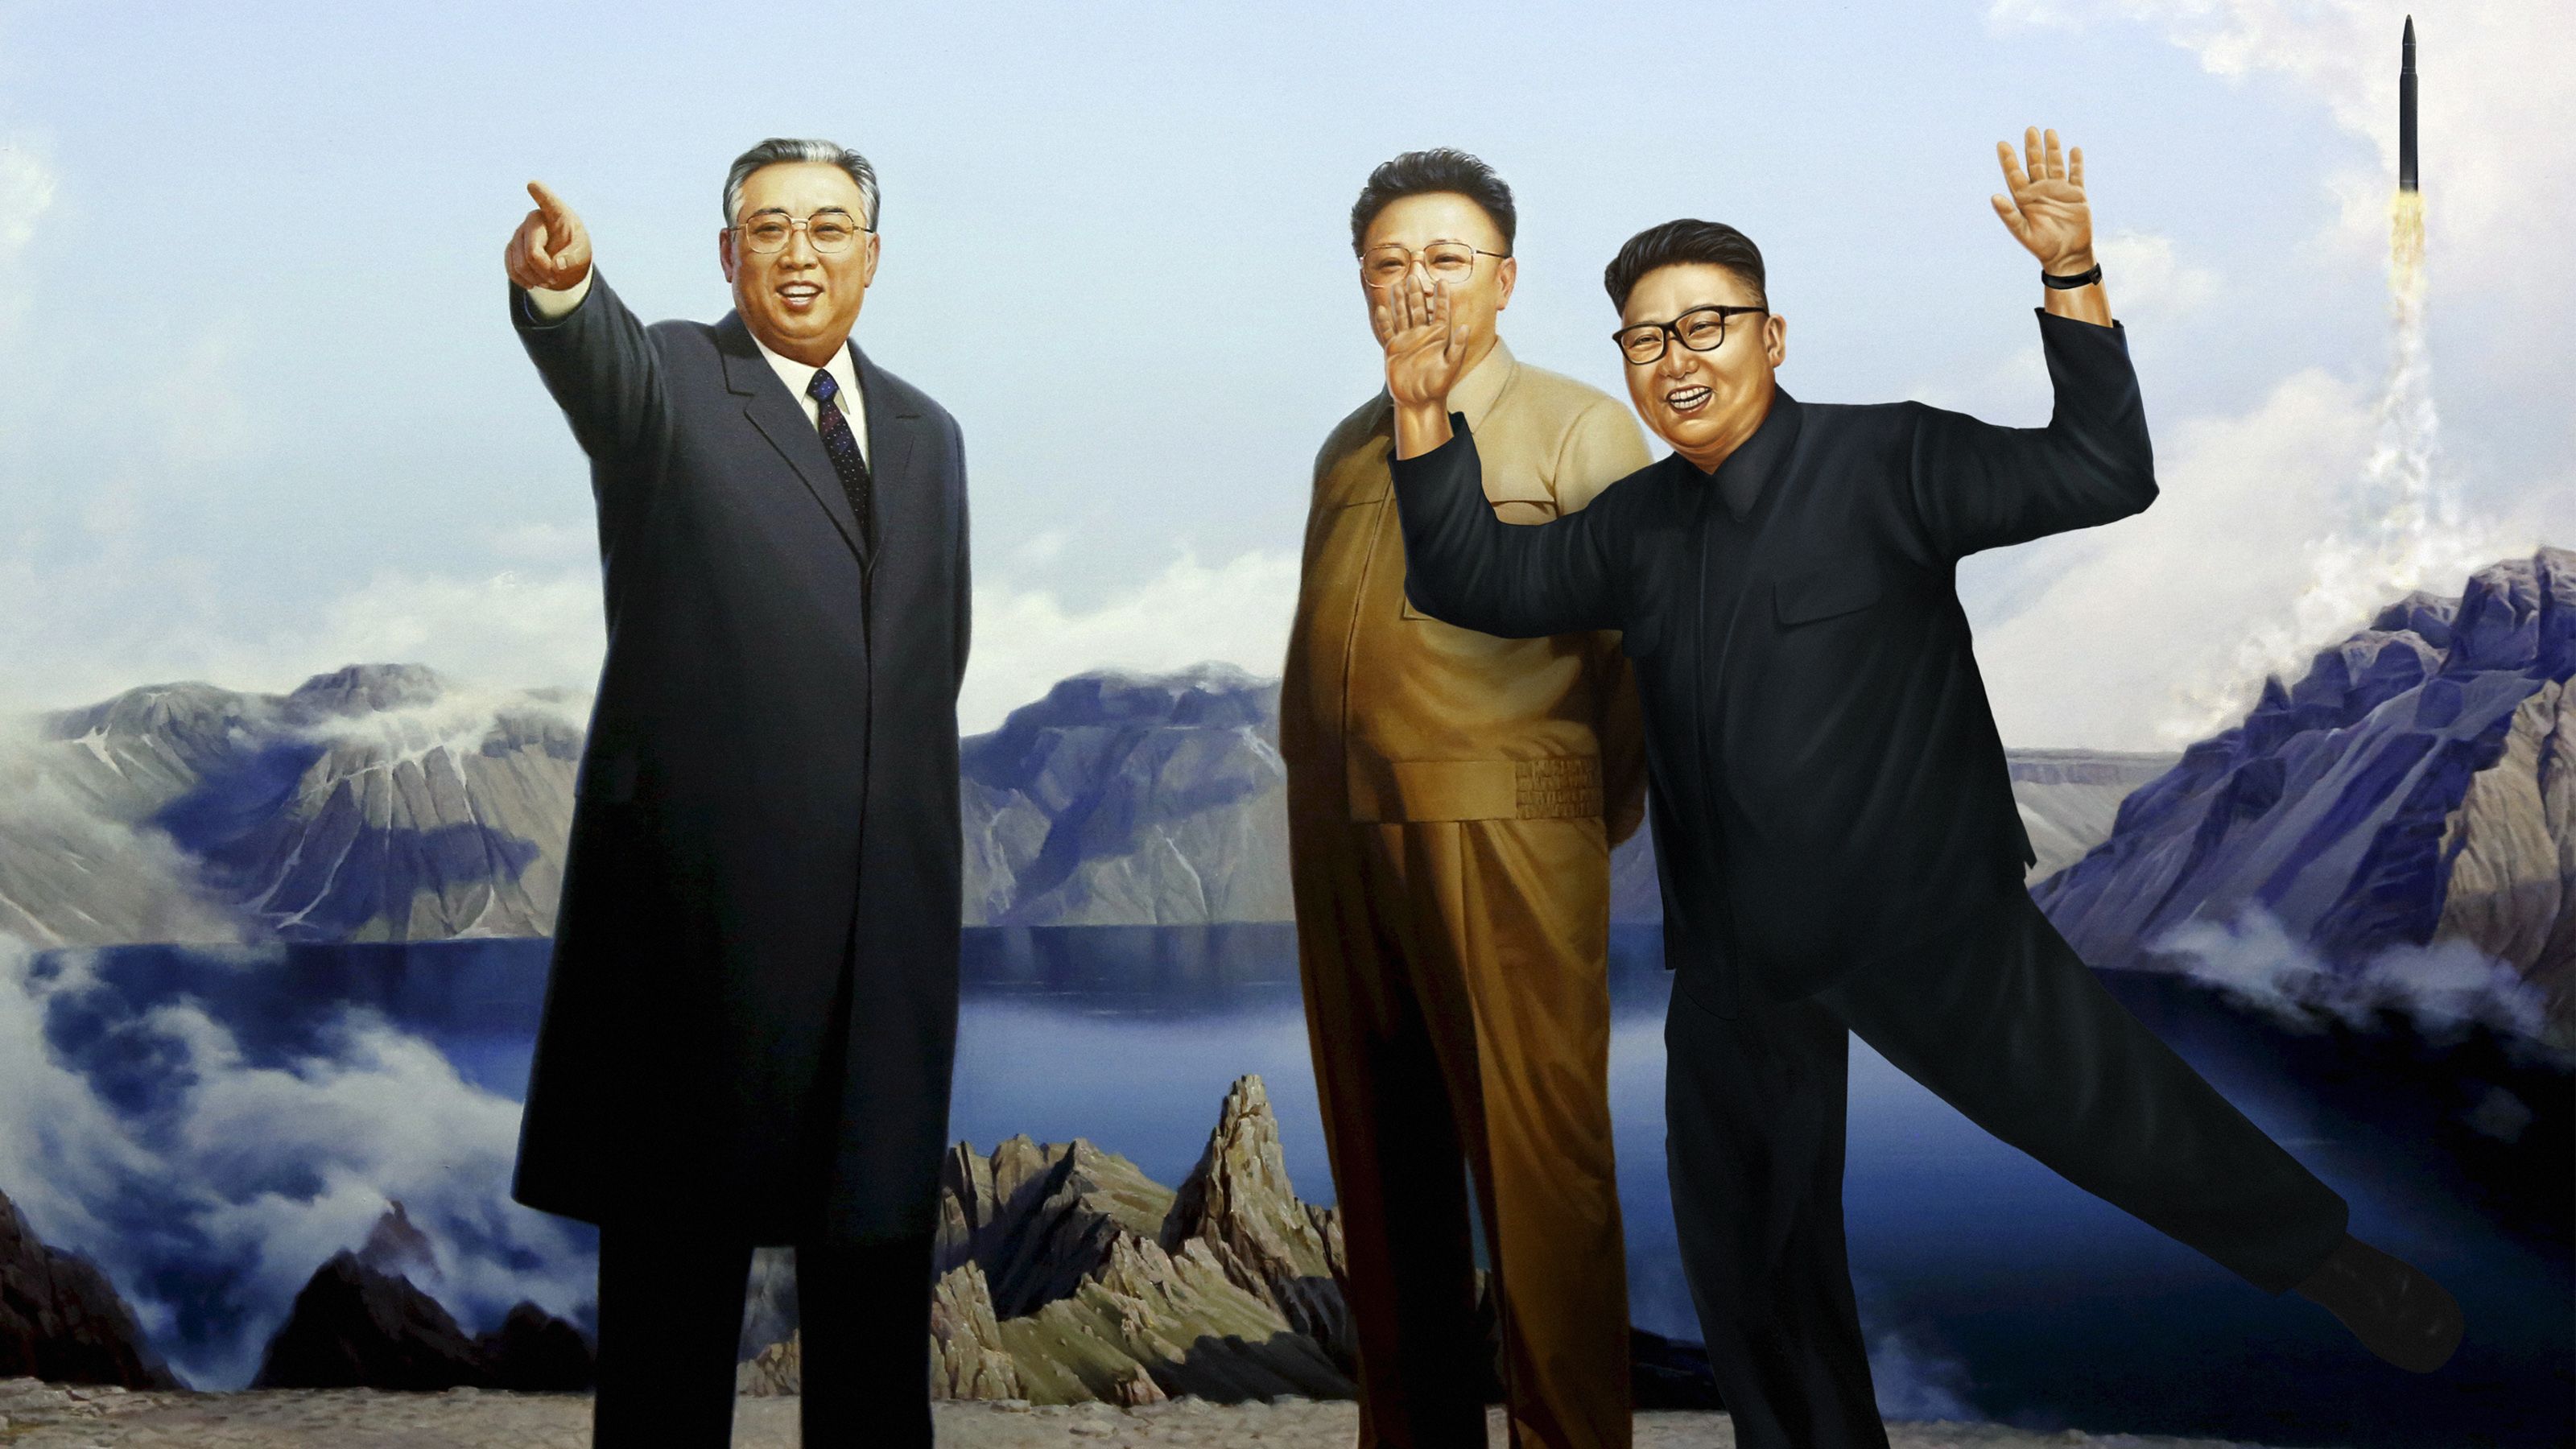 Arab Teen Glasses - Inside Kim Jon Un's Plot to Kill His Family - North Korea Nuclear Threat